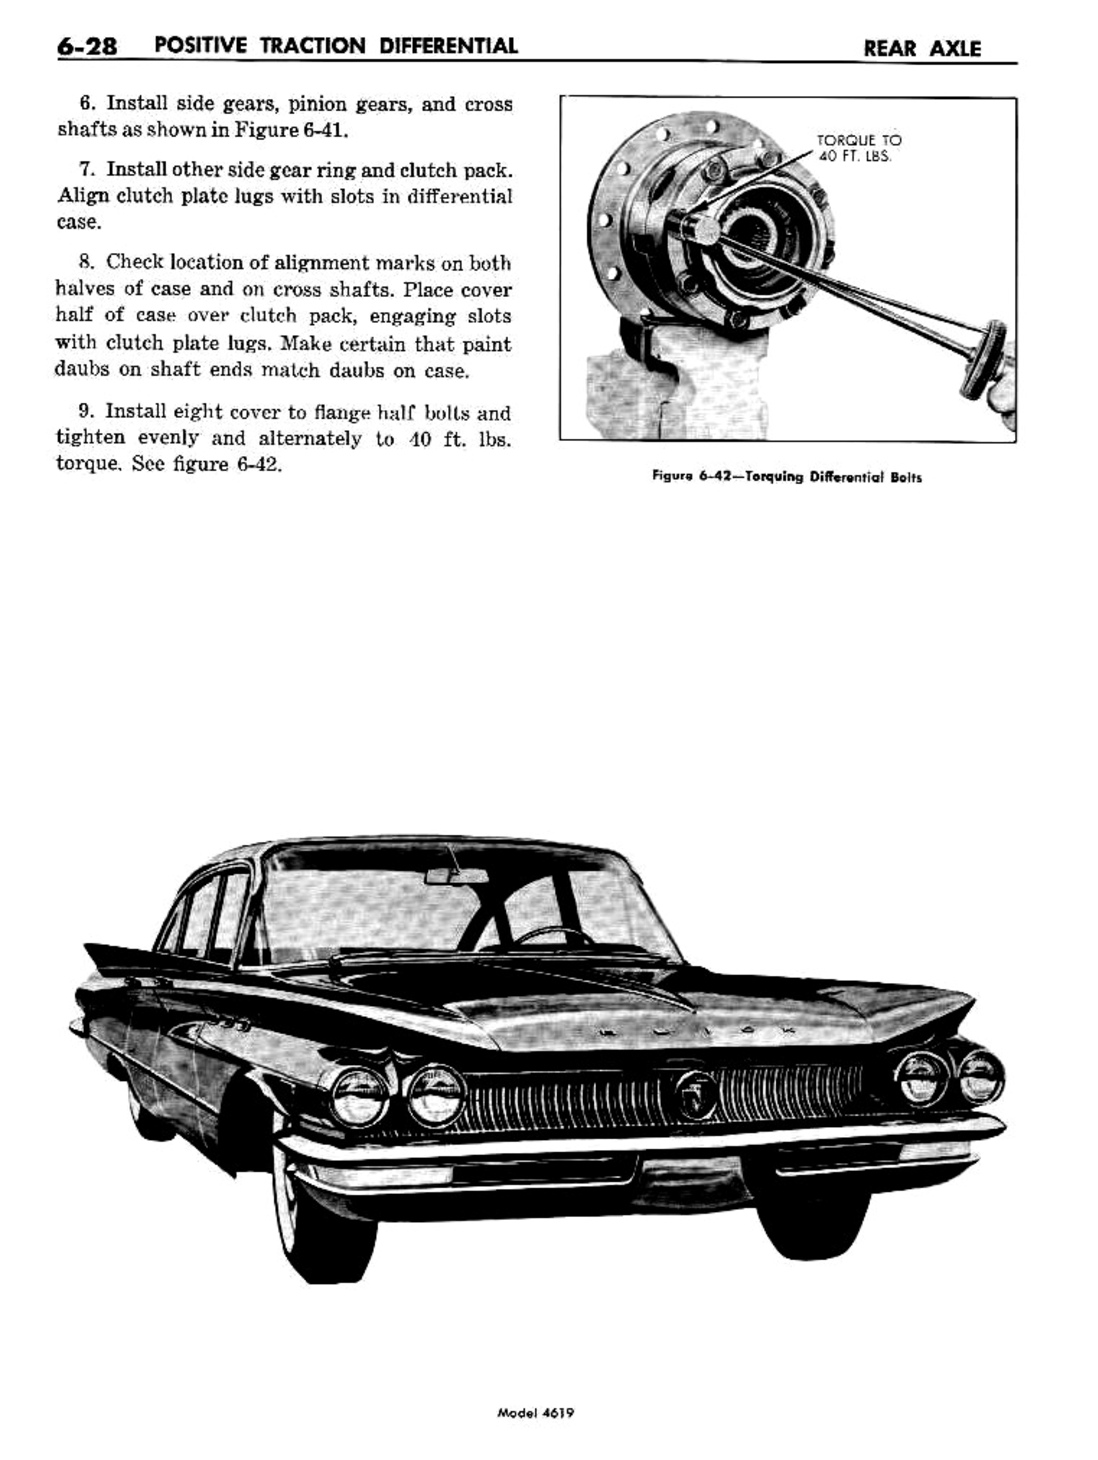 n_07 1960 Buick Shop Manual - Rear Axle-028-028.jpg